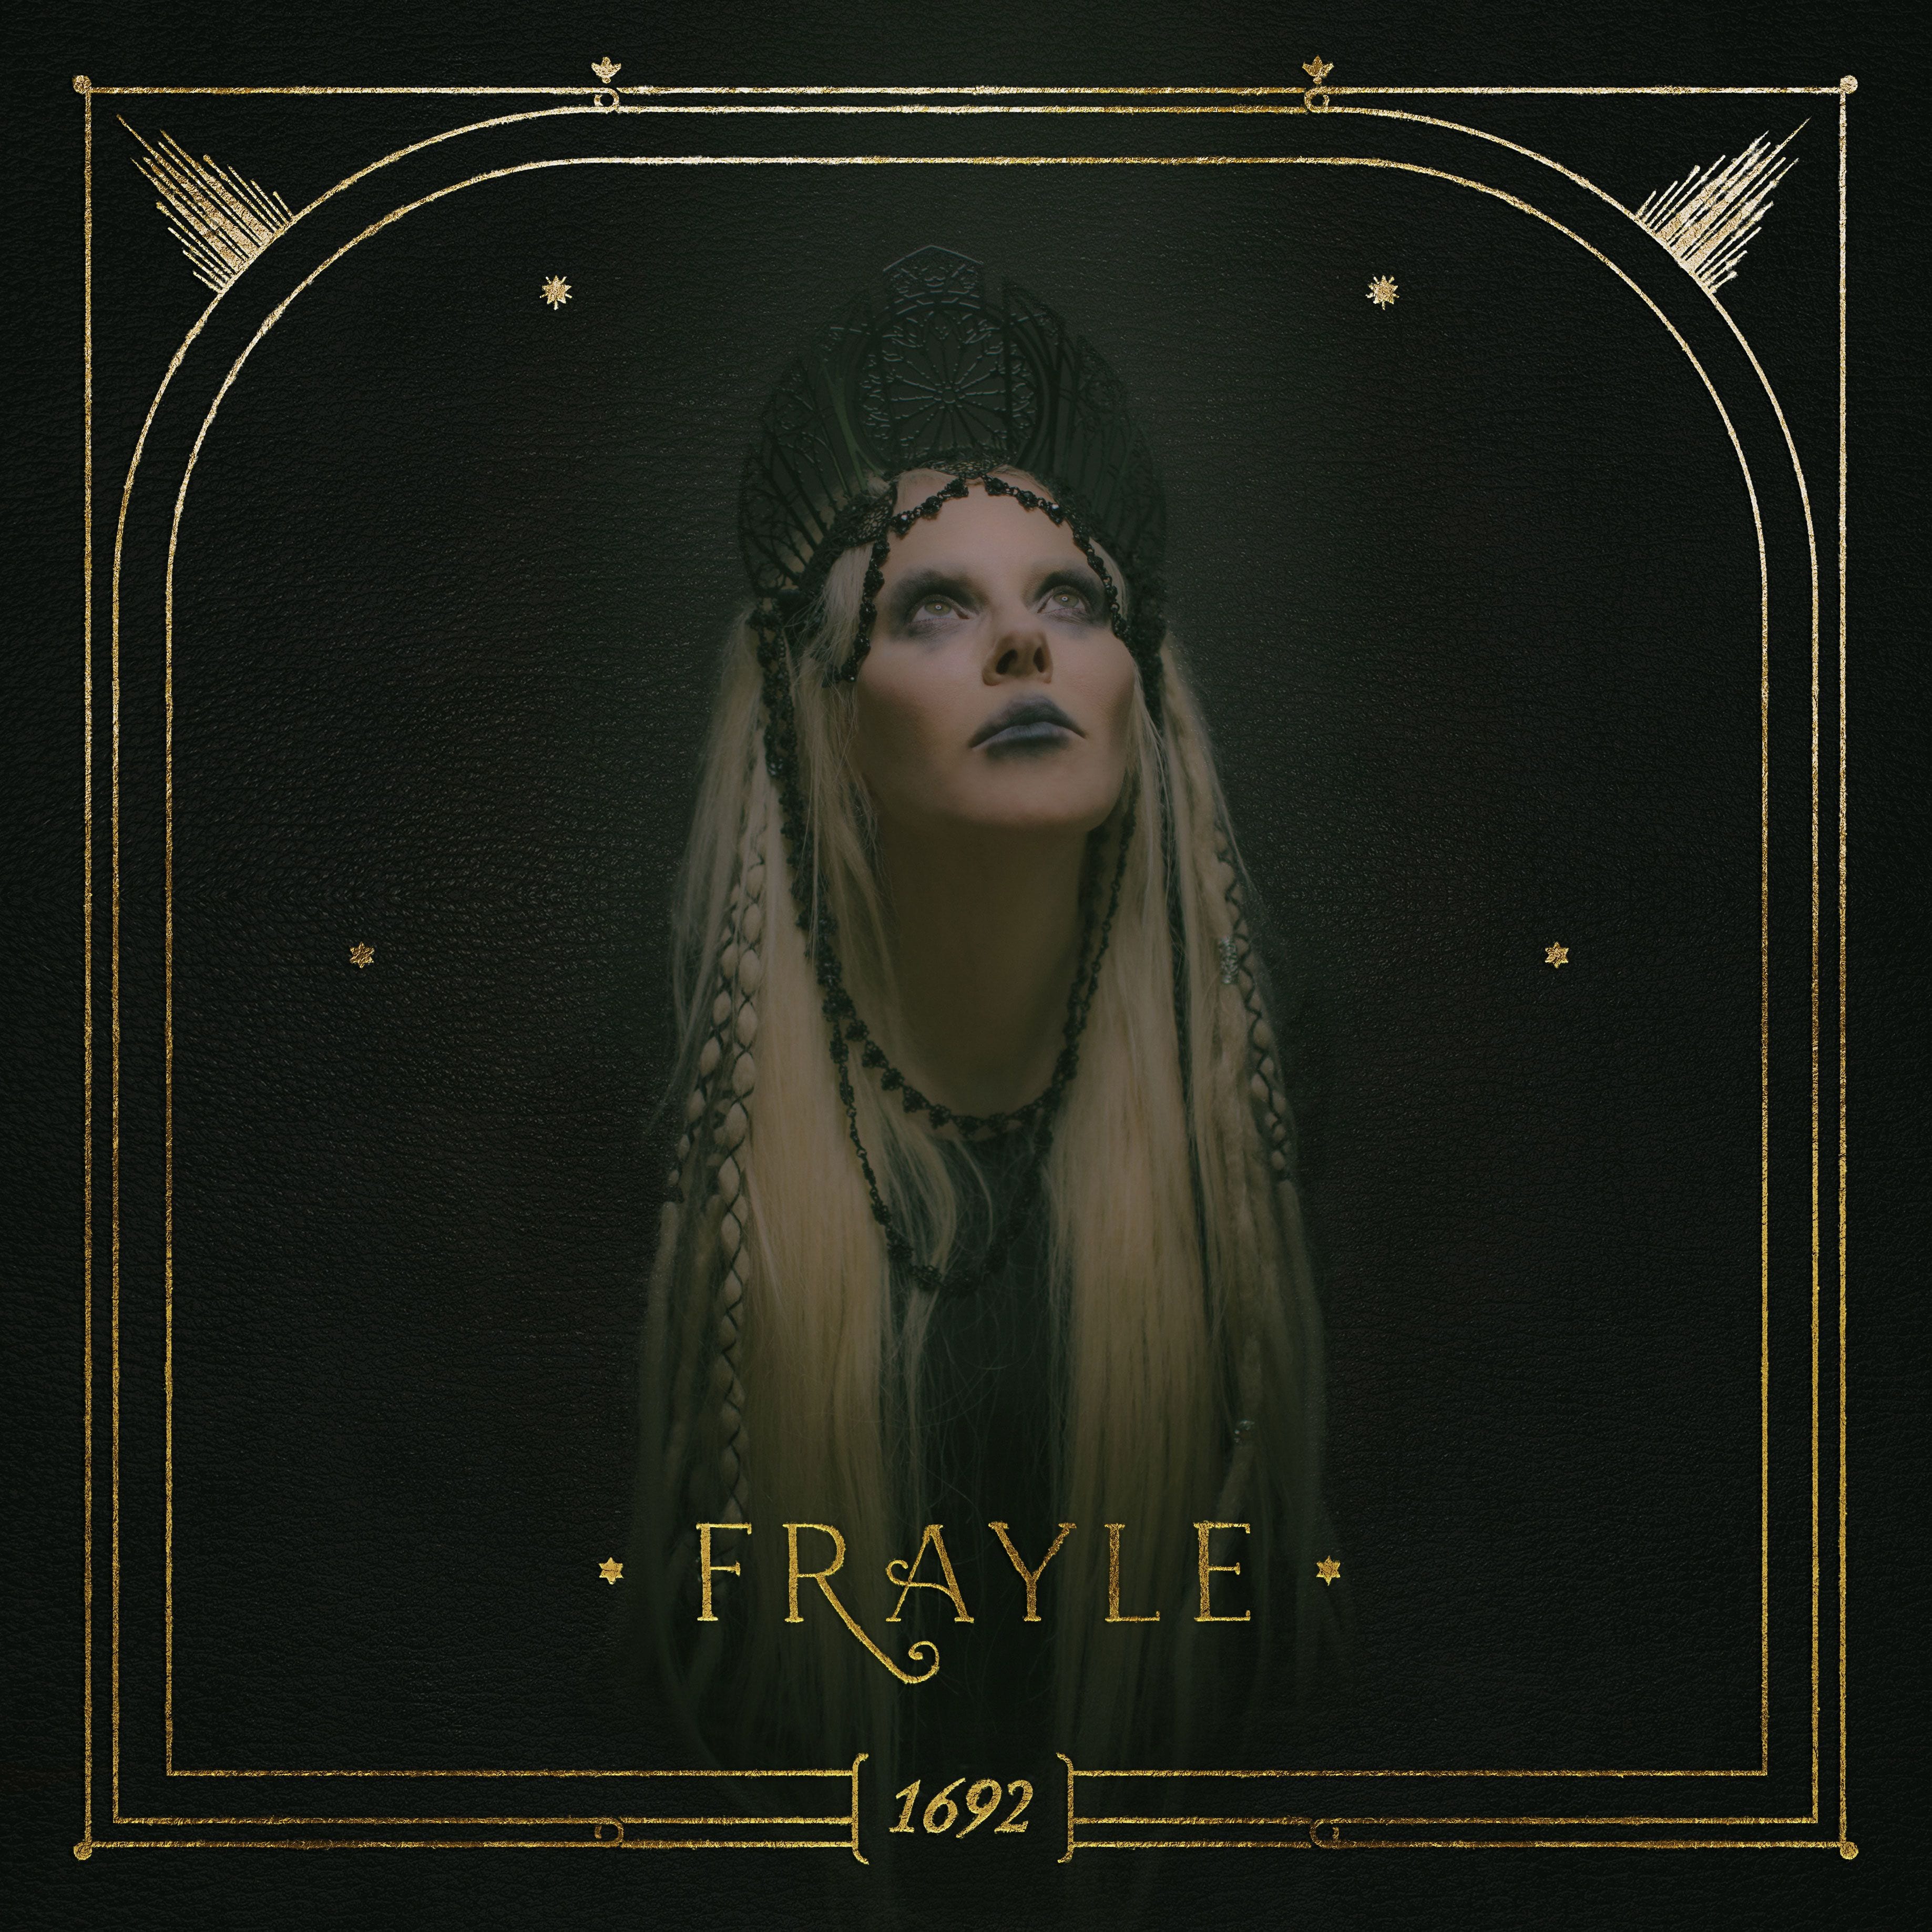 frayle-1692-album-stream-premiere